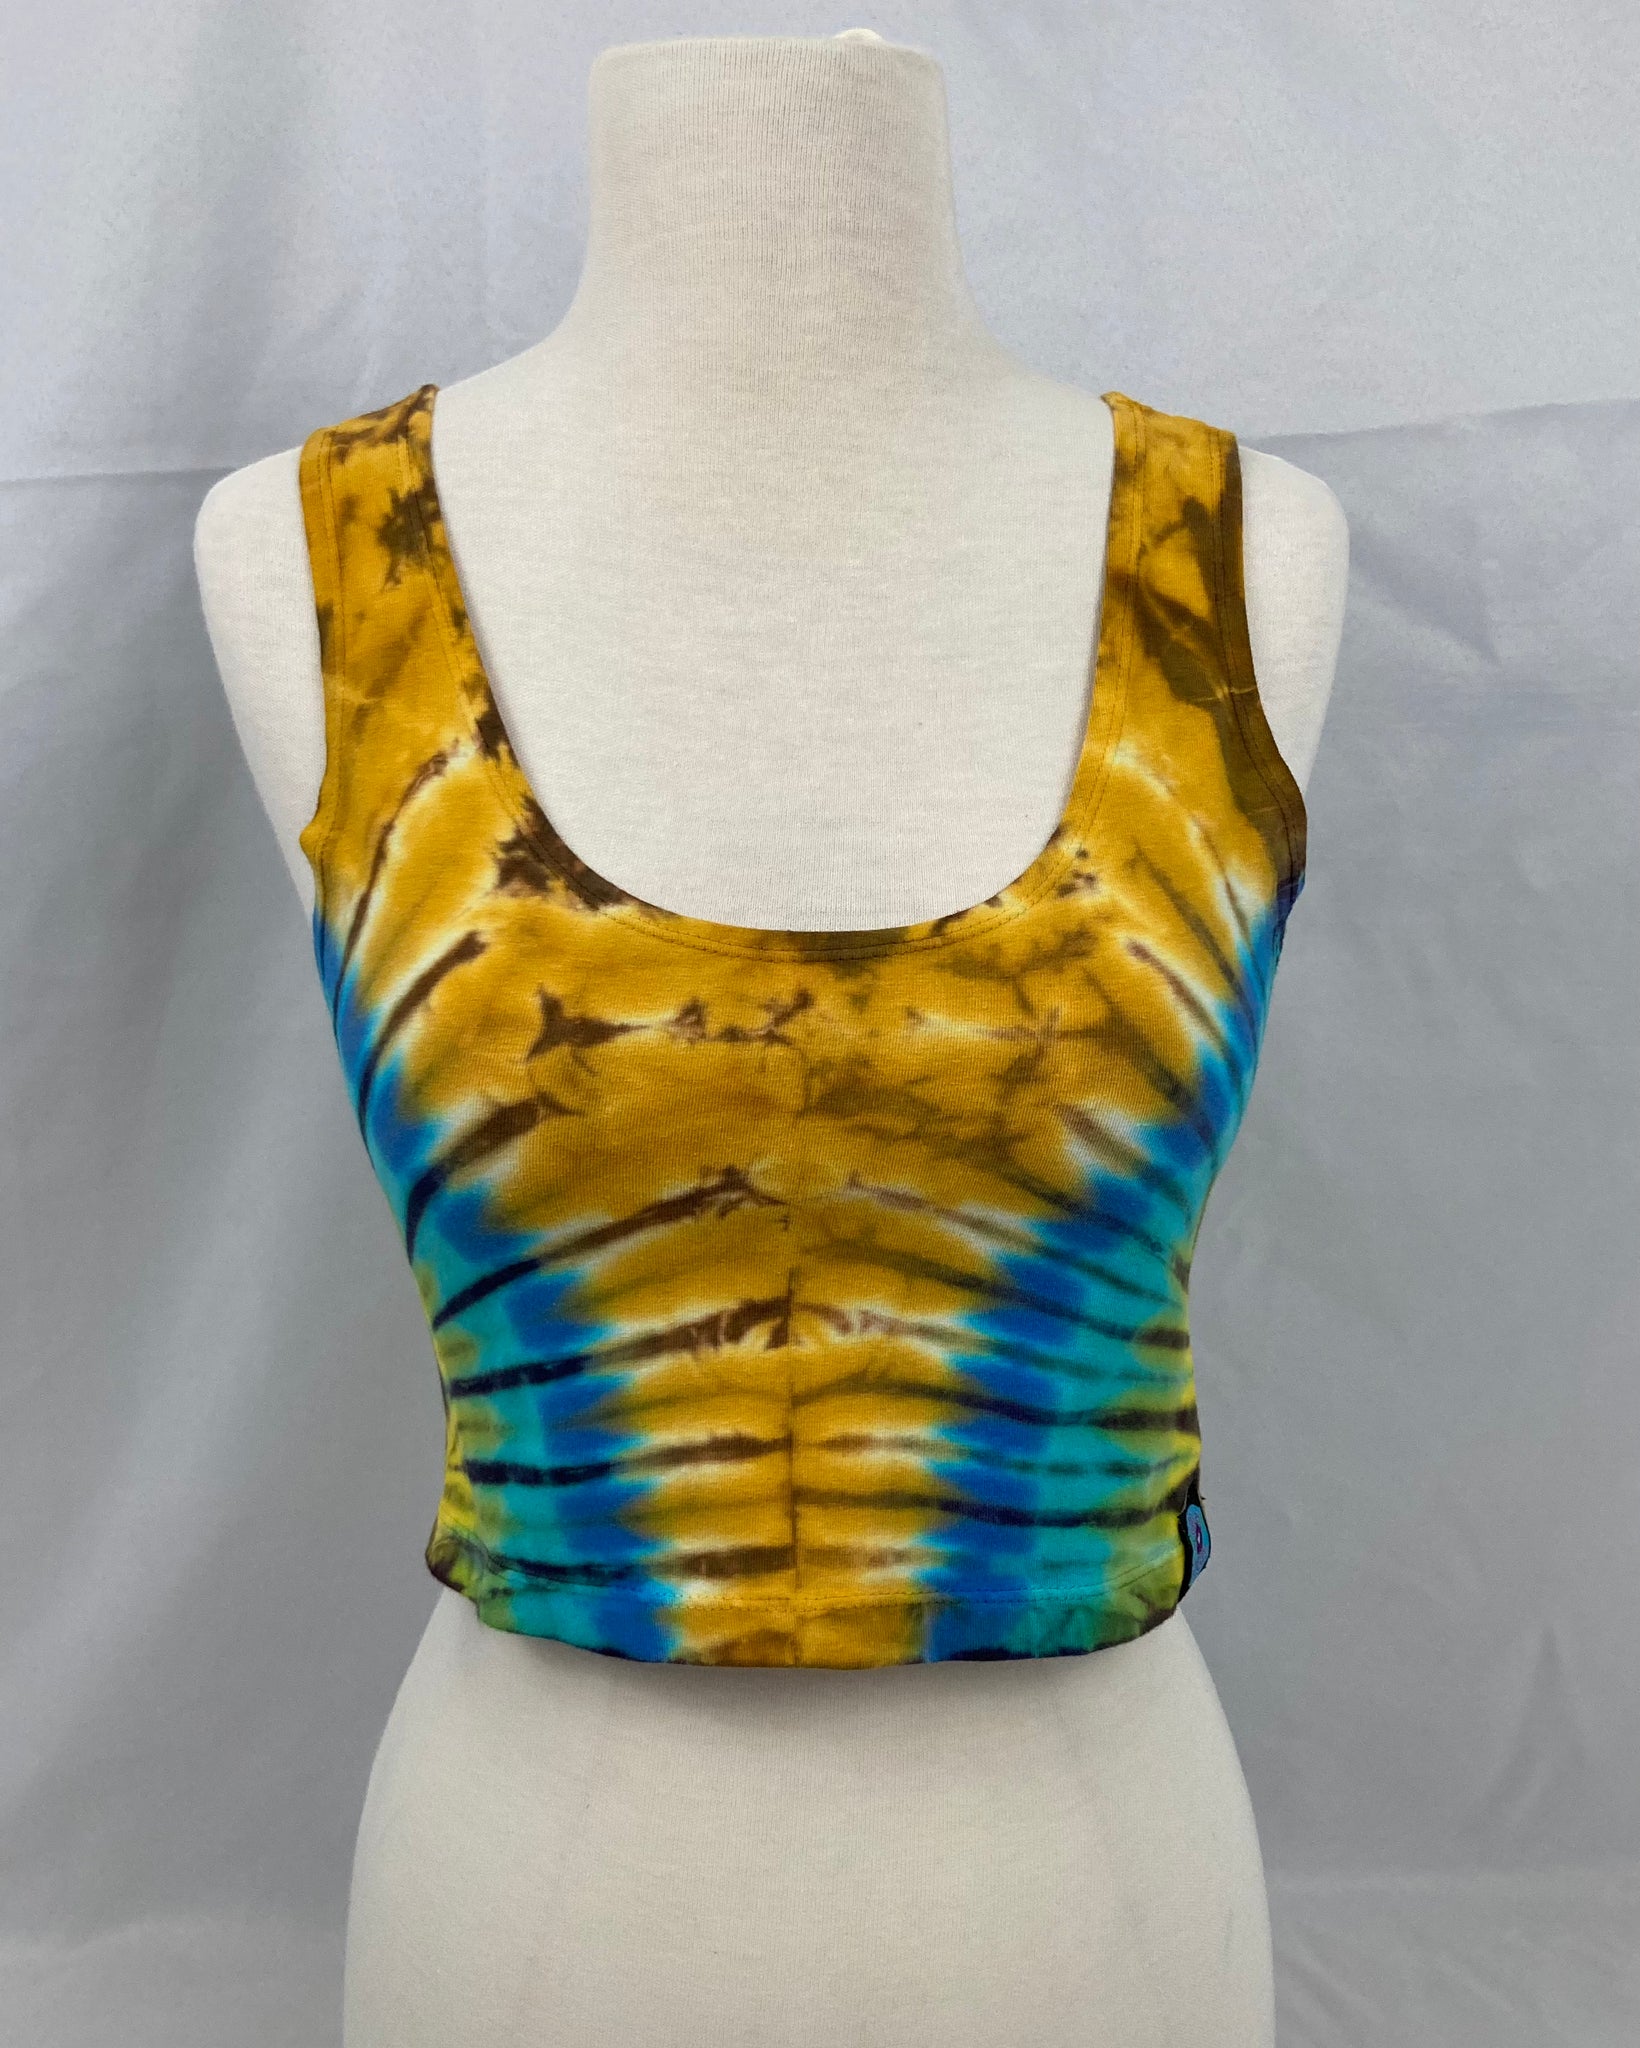 Women's Tan/Earthy Tie-Dyed Crop Top, M